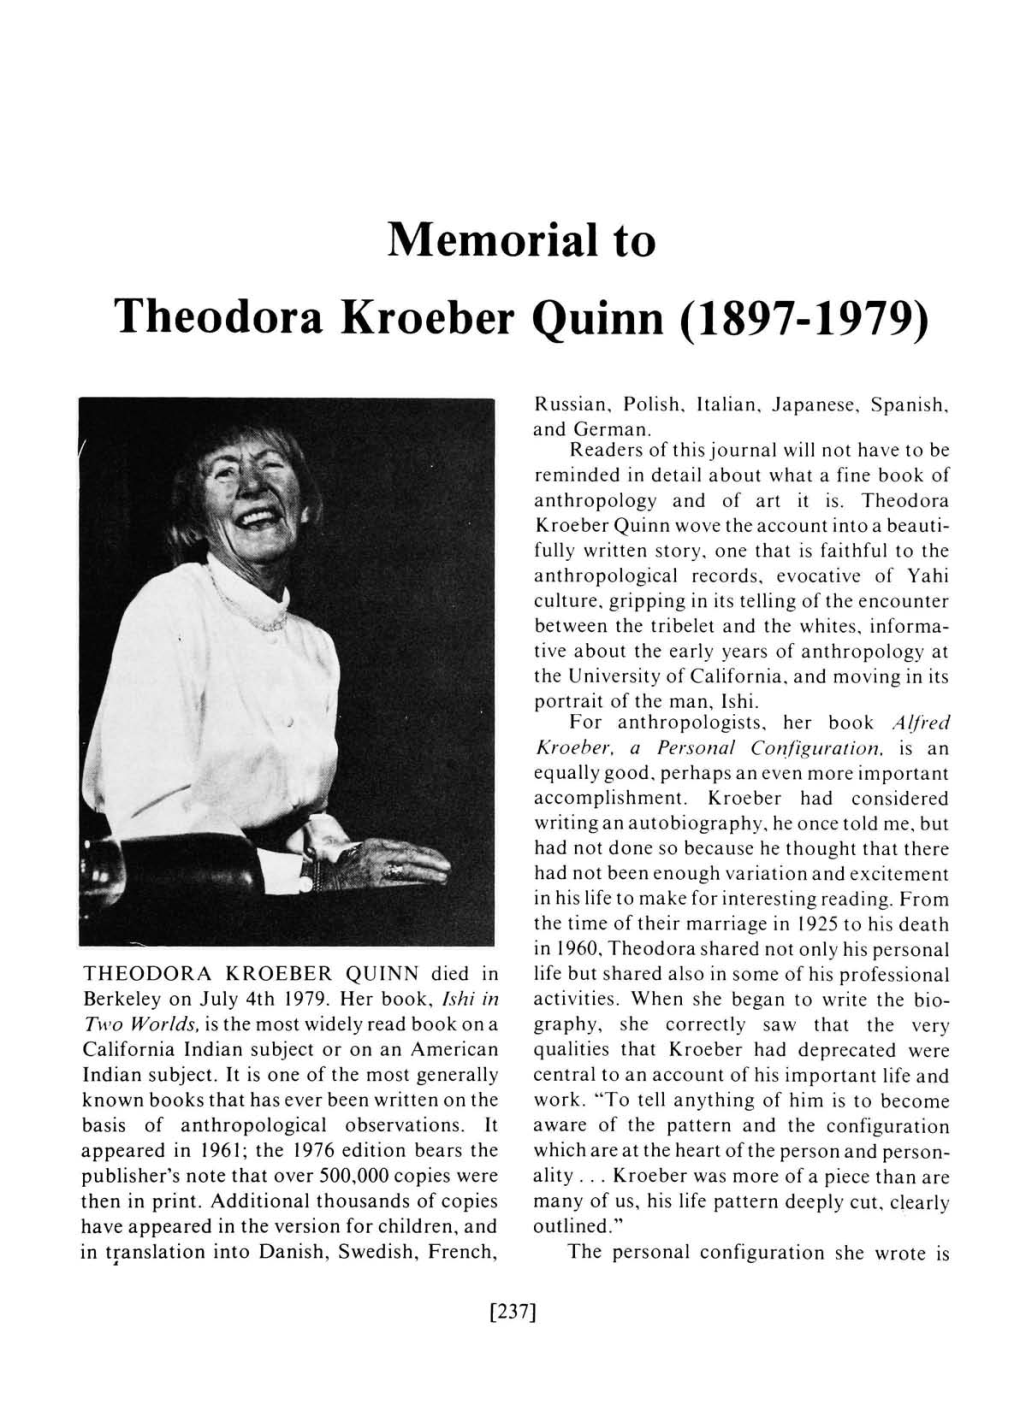 Memorial to Theodora Kroeber Quinn (1897-1979)